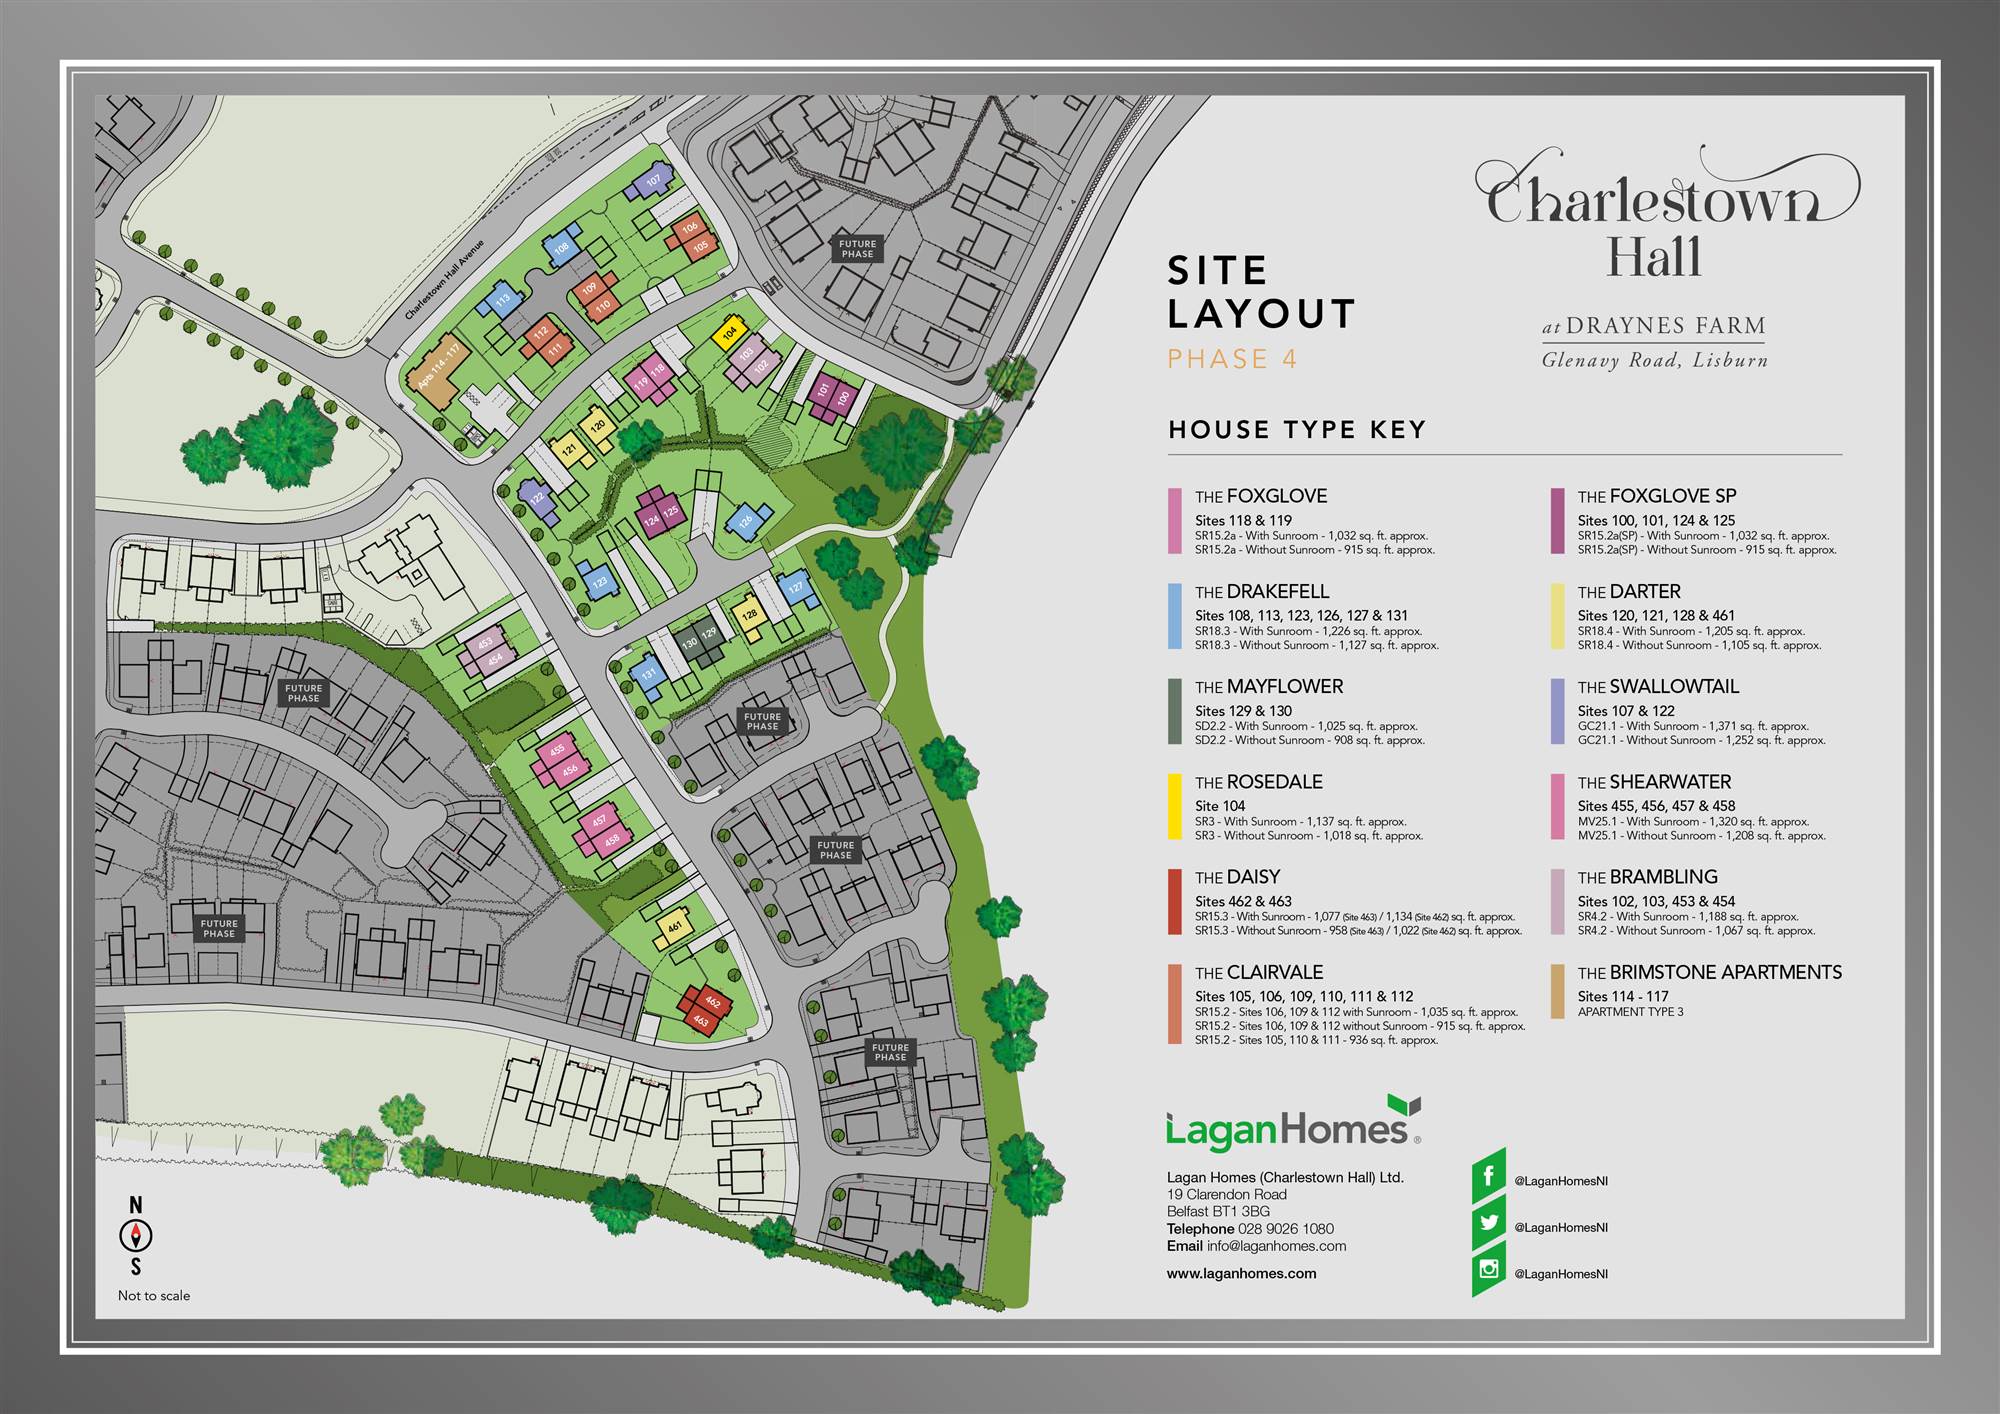 Site L463 Charlestown Hall